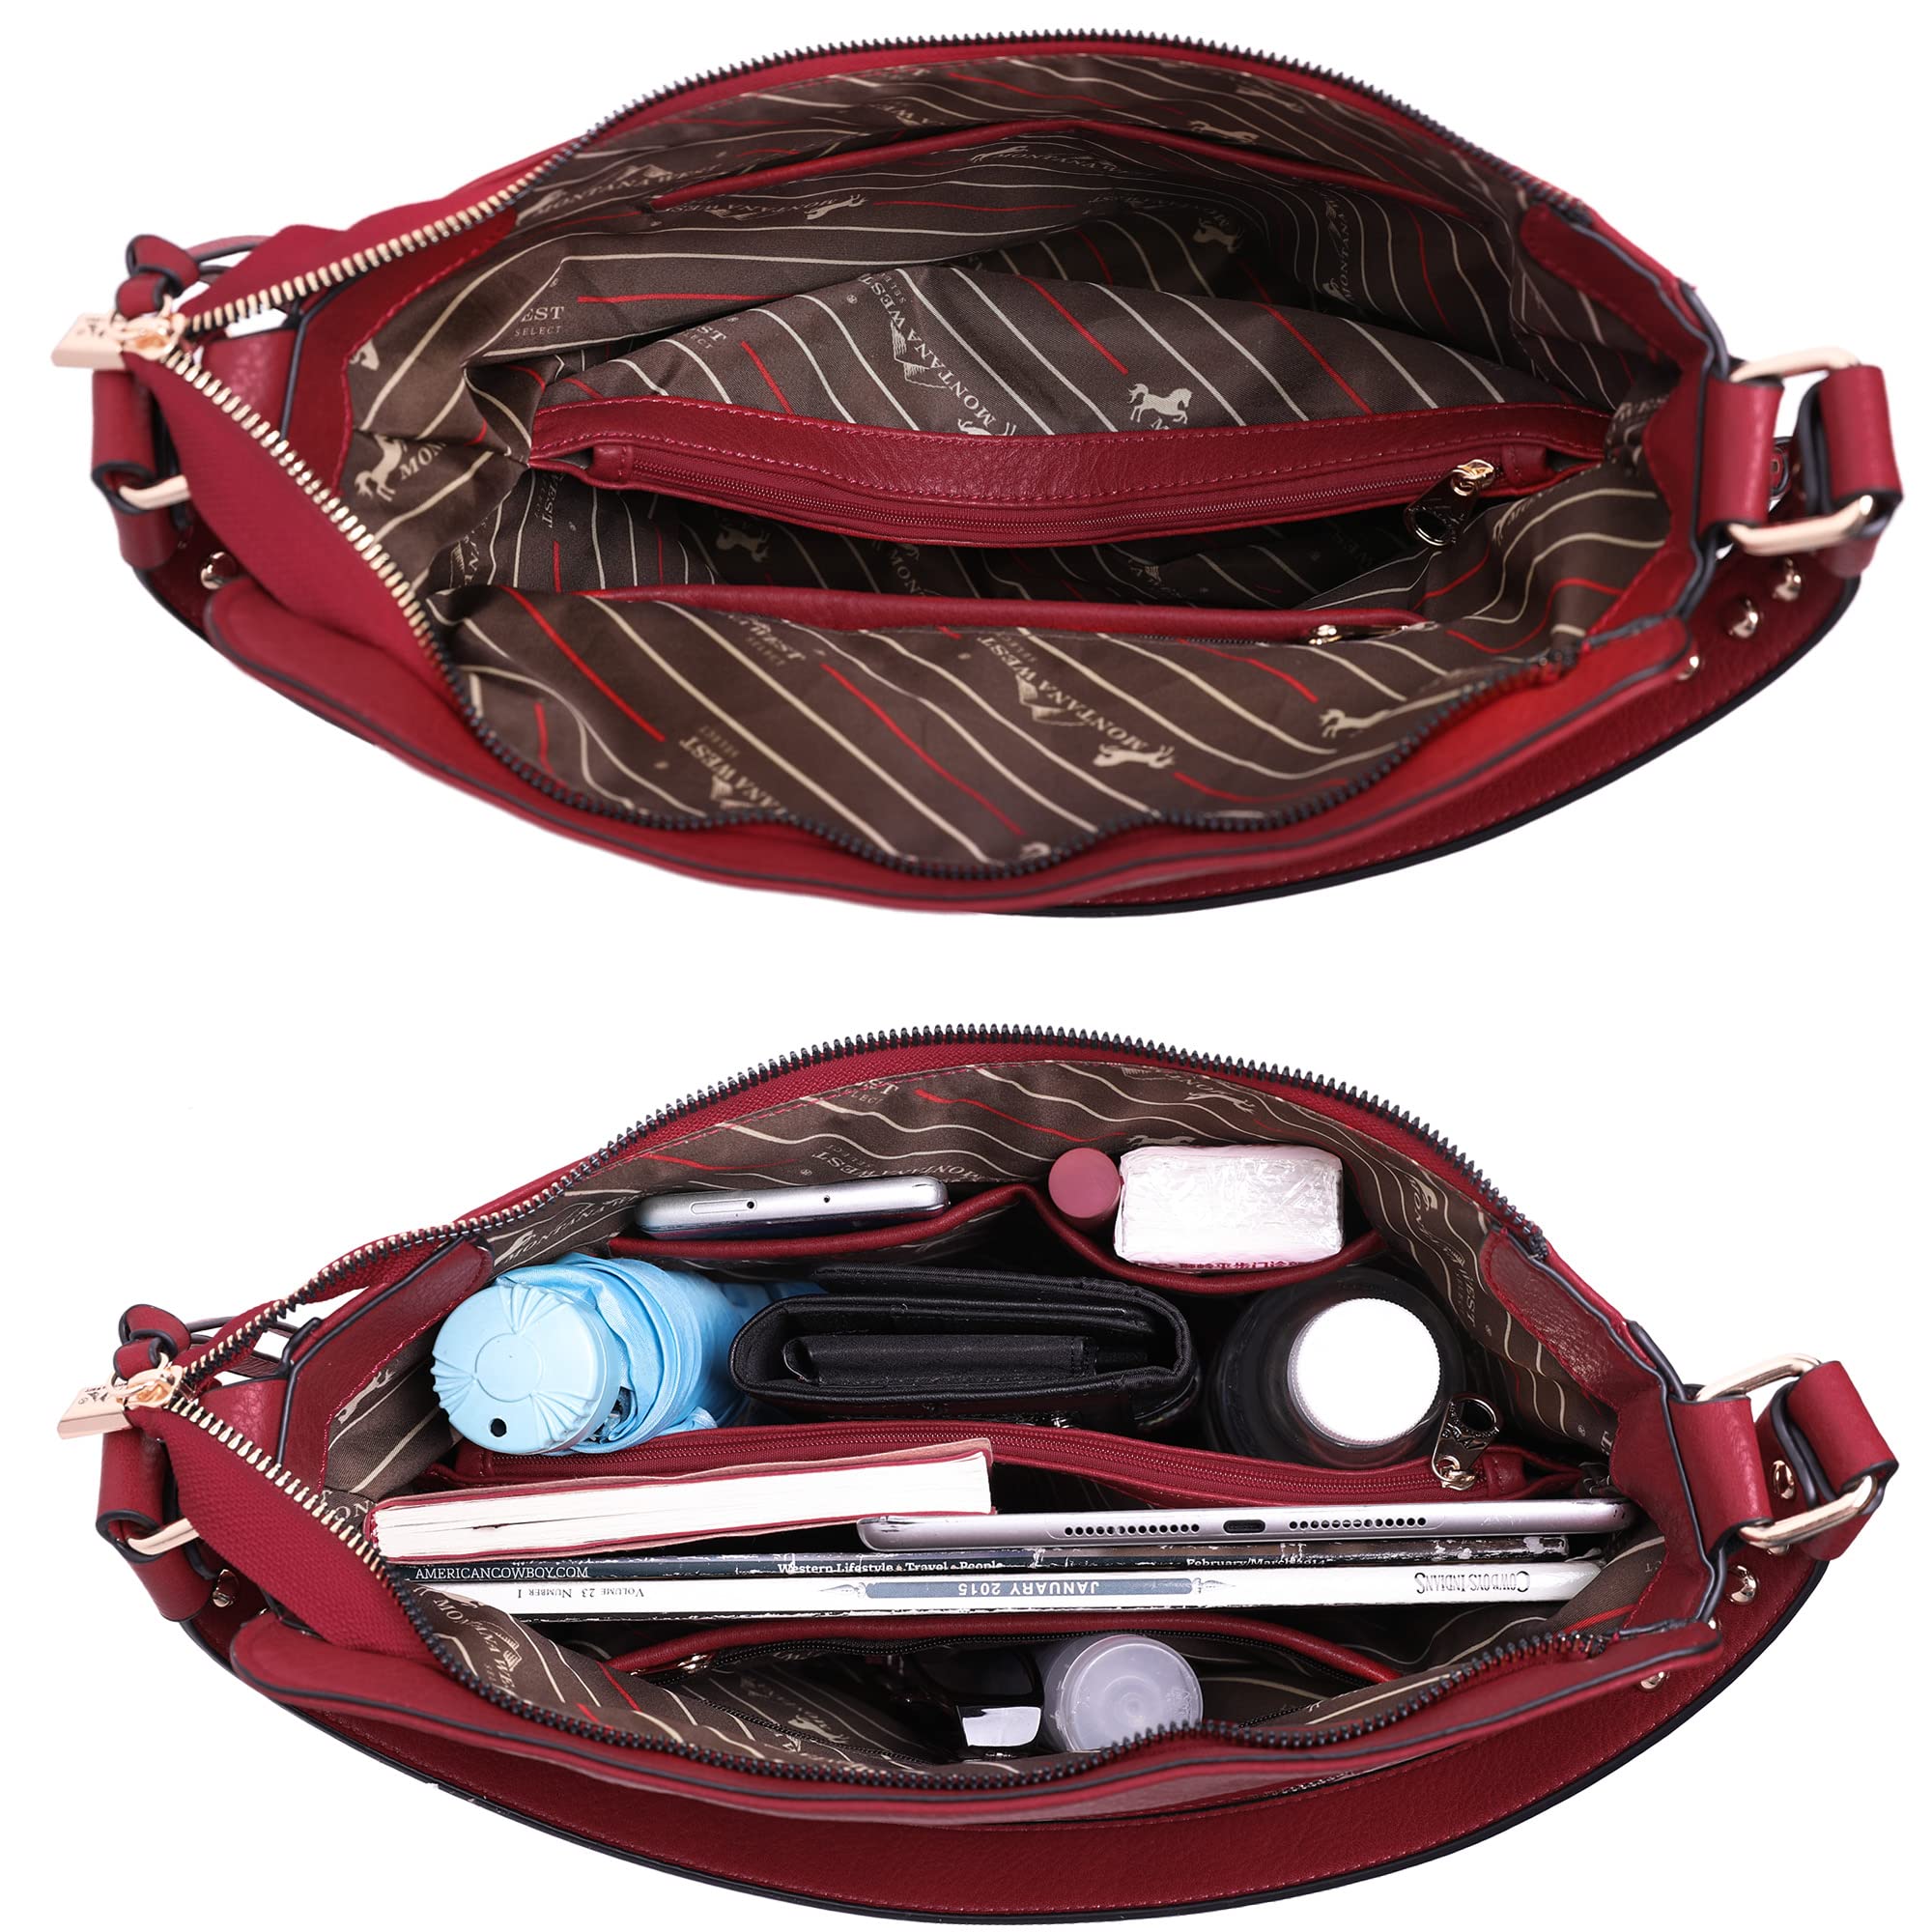 Montana West Hobo Handbag for Women Large Purses and Handbags with Studs and Crossbody Strap